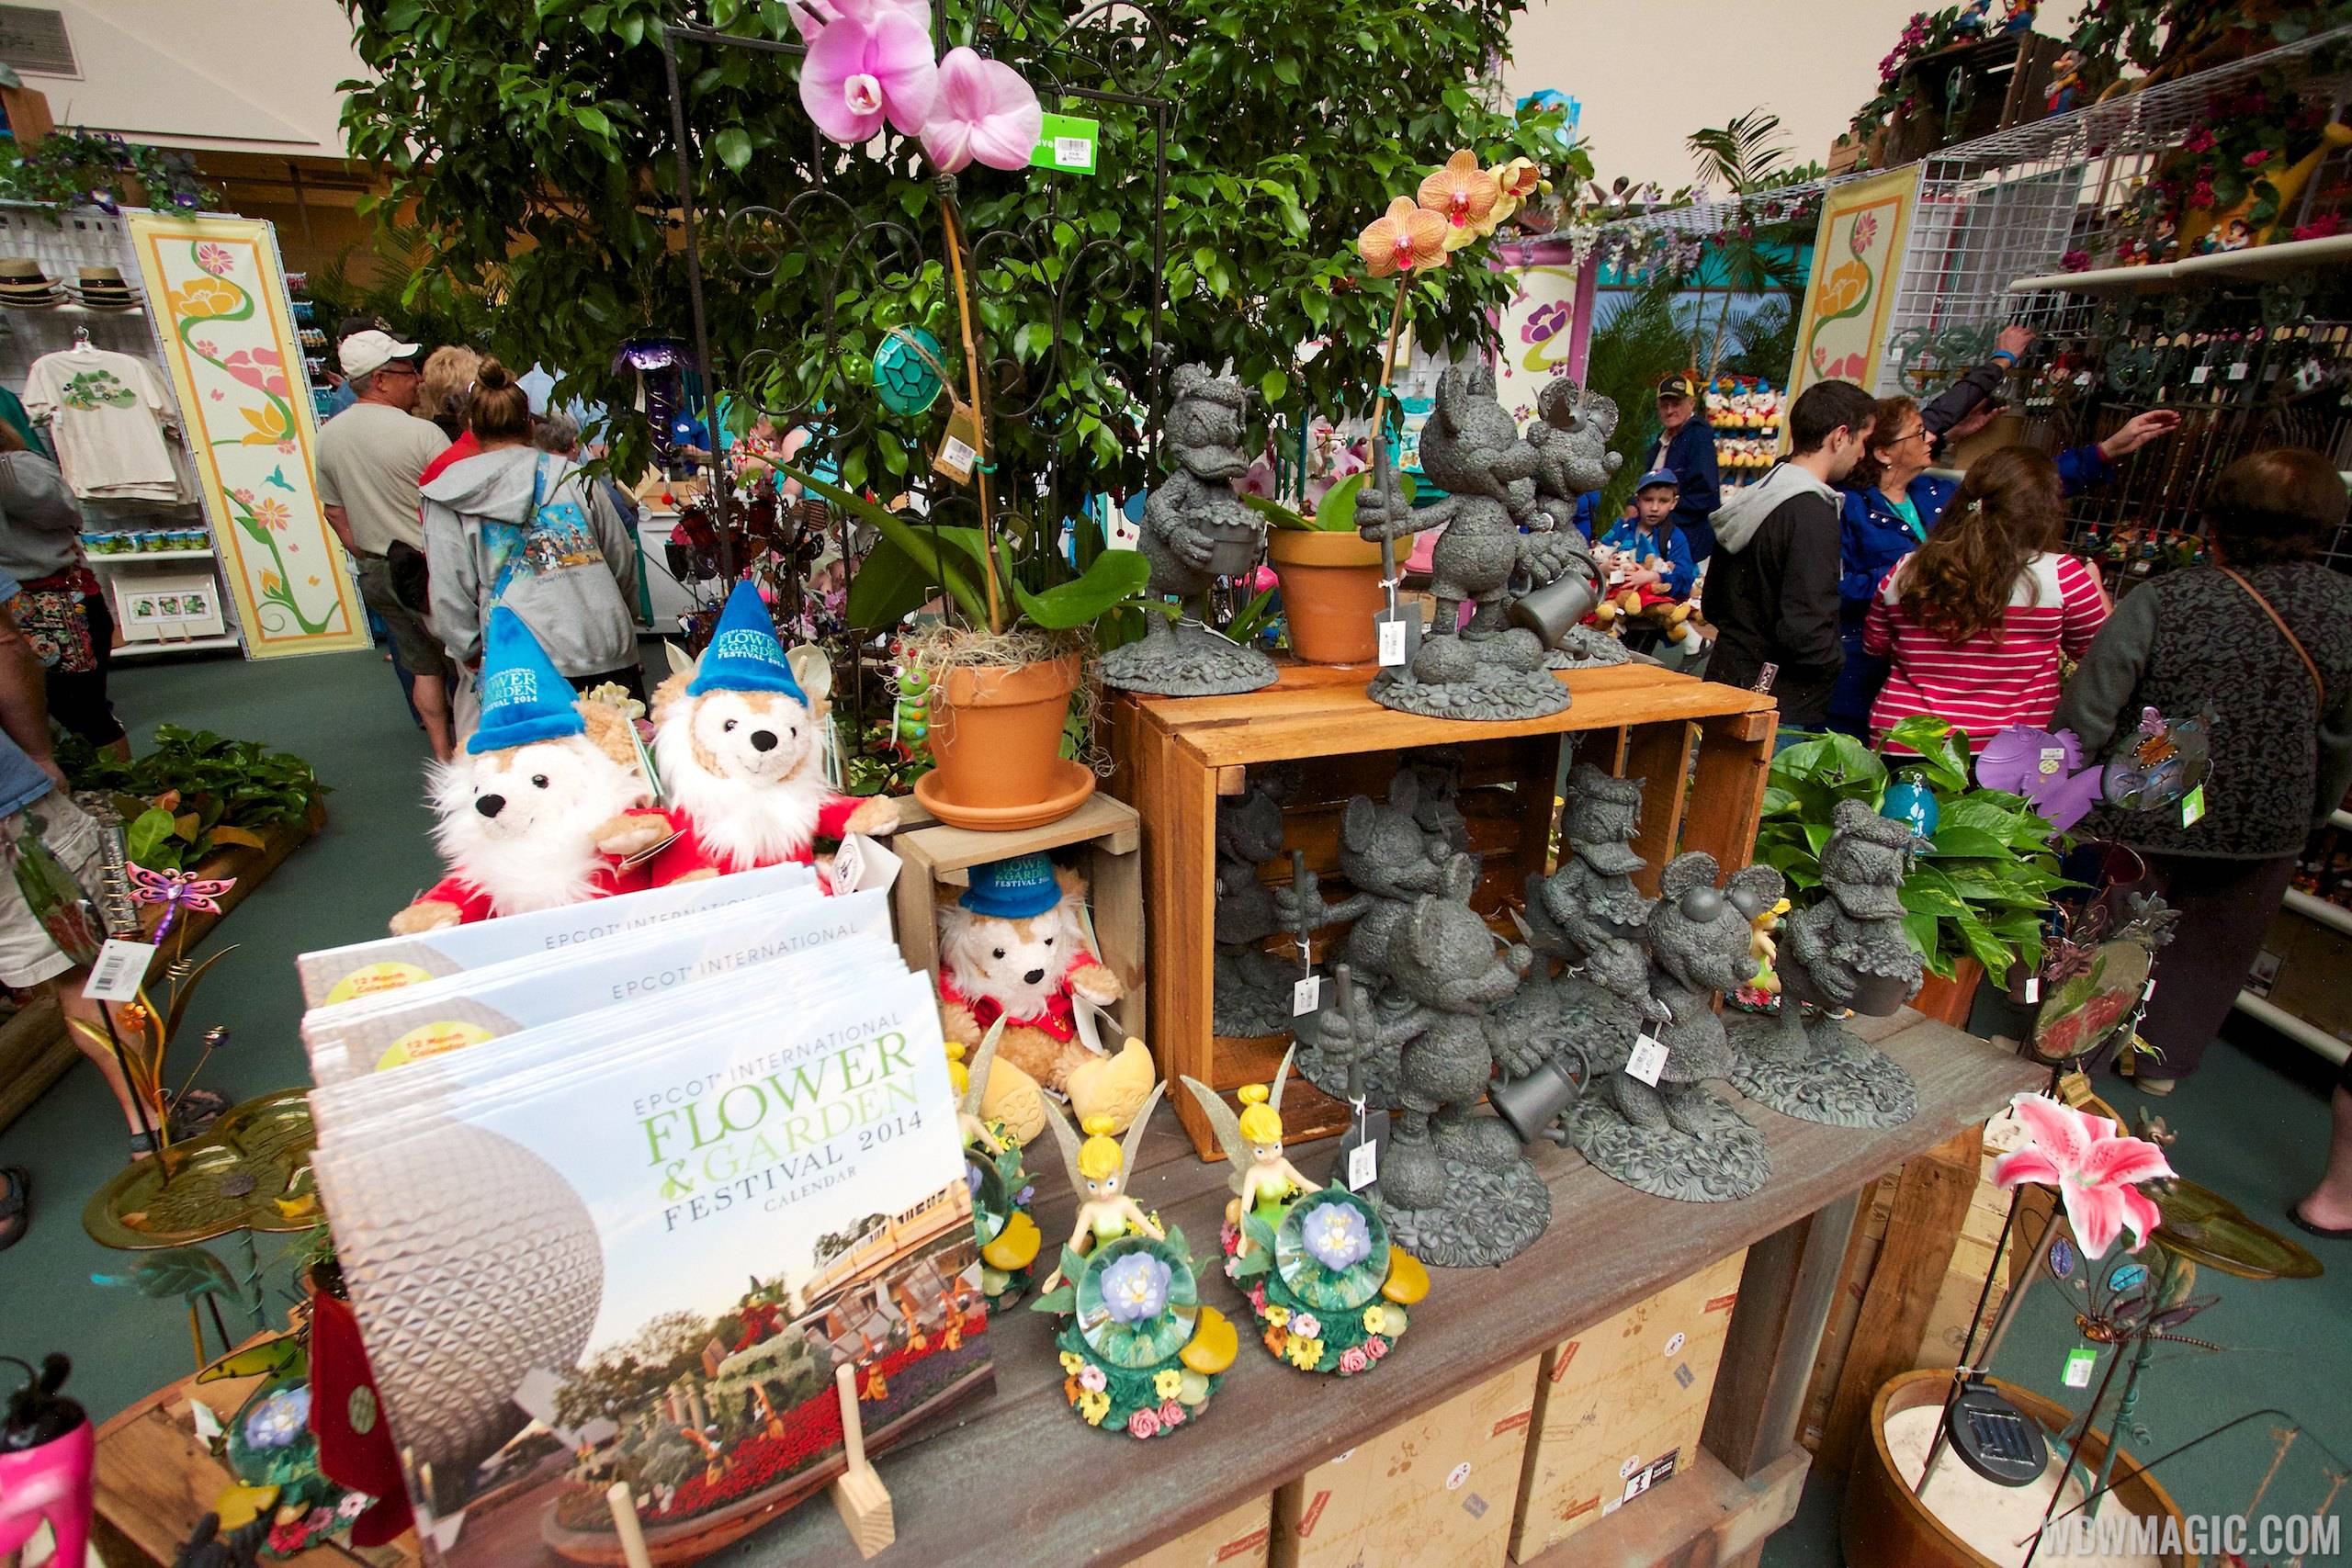 PHOTOS - Take a full photo tour around the 2014 Epcot International Flower and Garden Festival